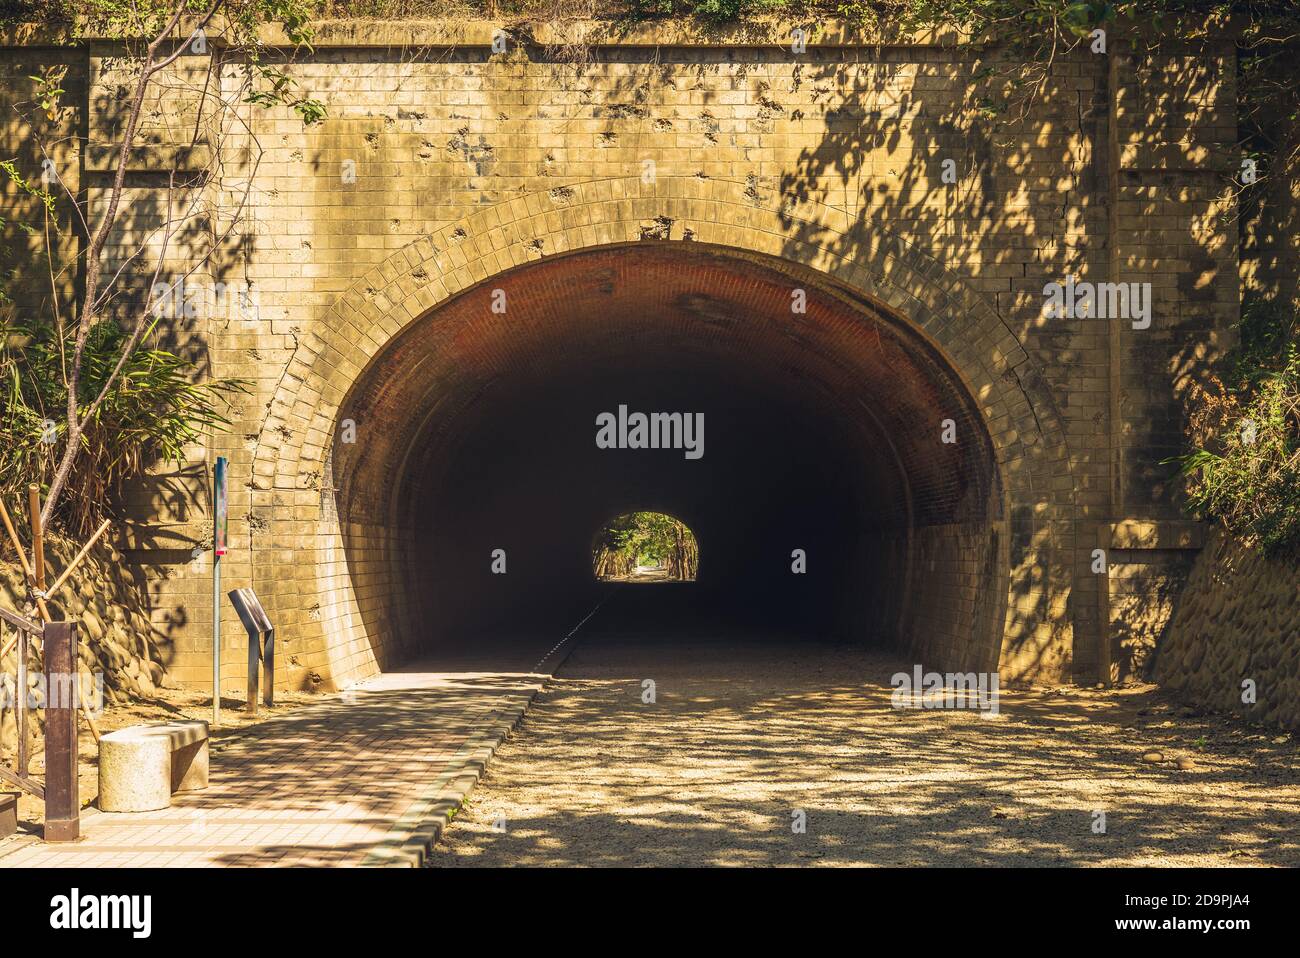 facade from Qiding Twin Tunnels in miaoli county, taiwan Stock Photo